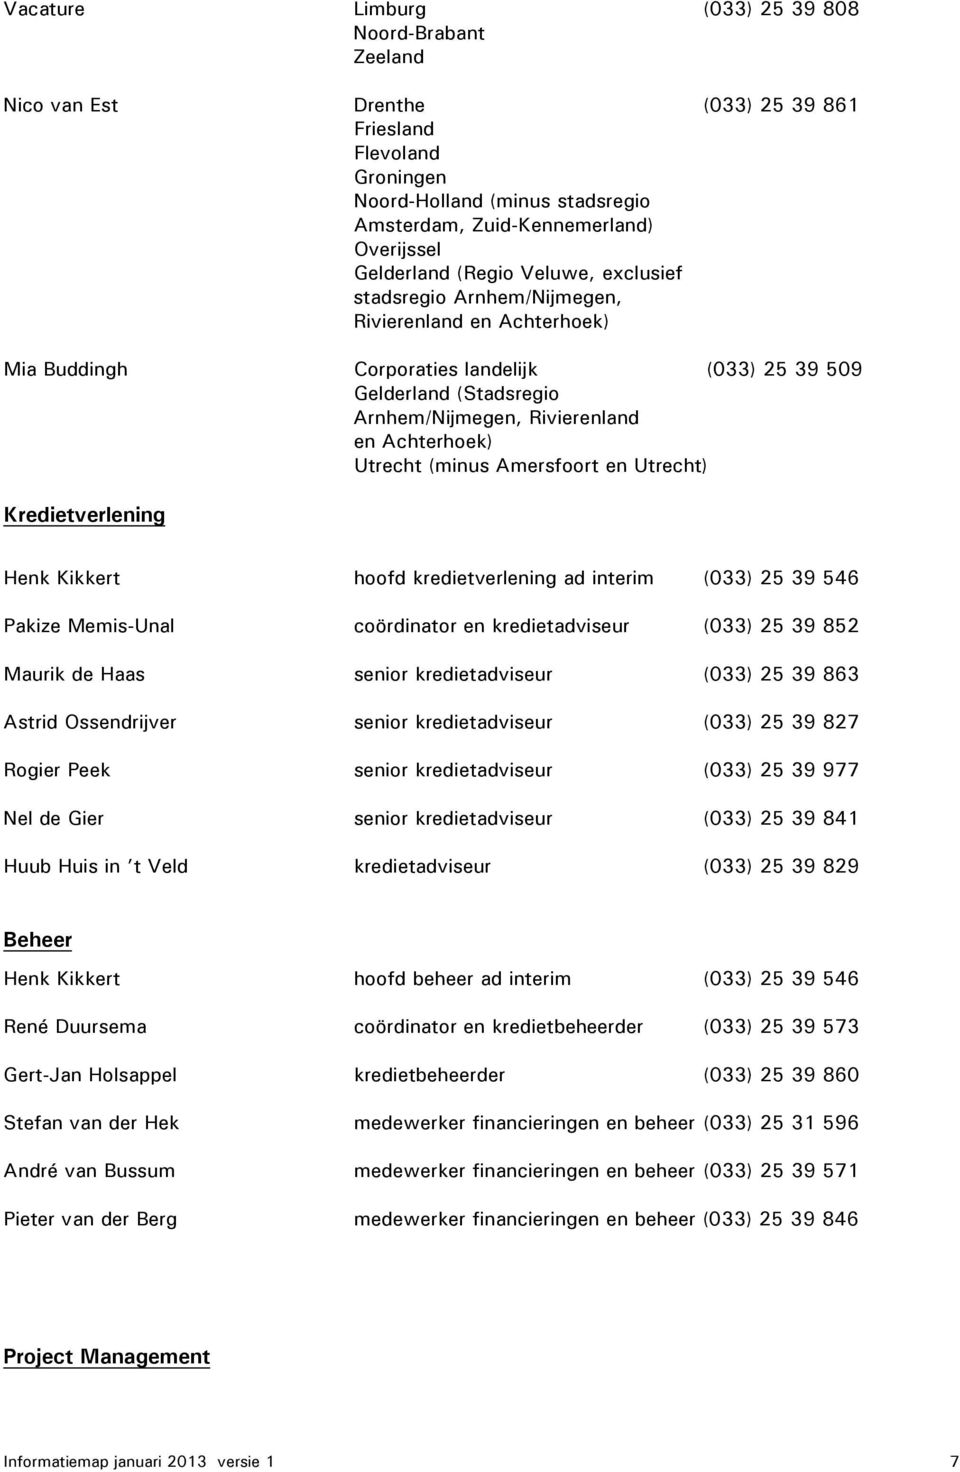 Achterhoek) Utrecht (minus Amersfoort en Utrecht) Kredietverlening Henk Kikkert hoofd kredietverlening ad interim (033) 25 39 546 Pakize Memis-Unal coördinator en kredietadviseur (033) 25 39 852